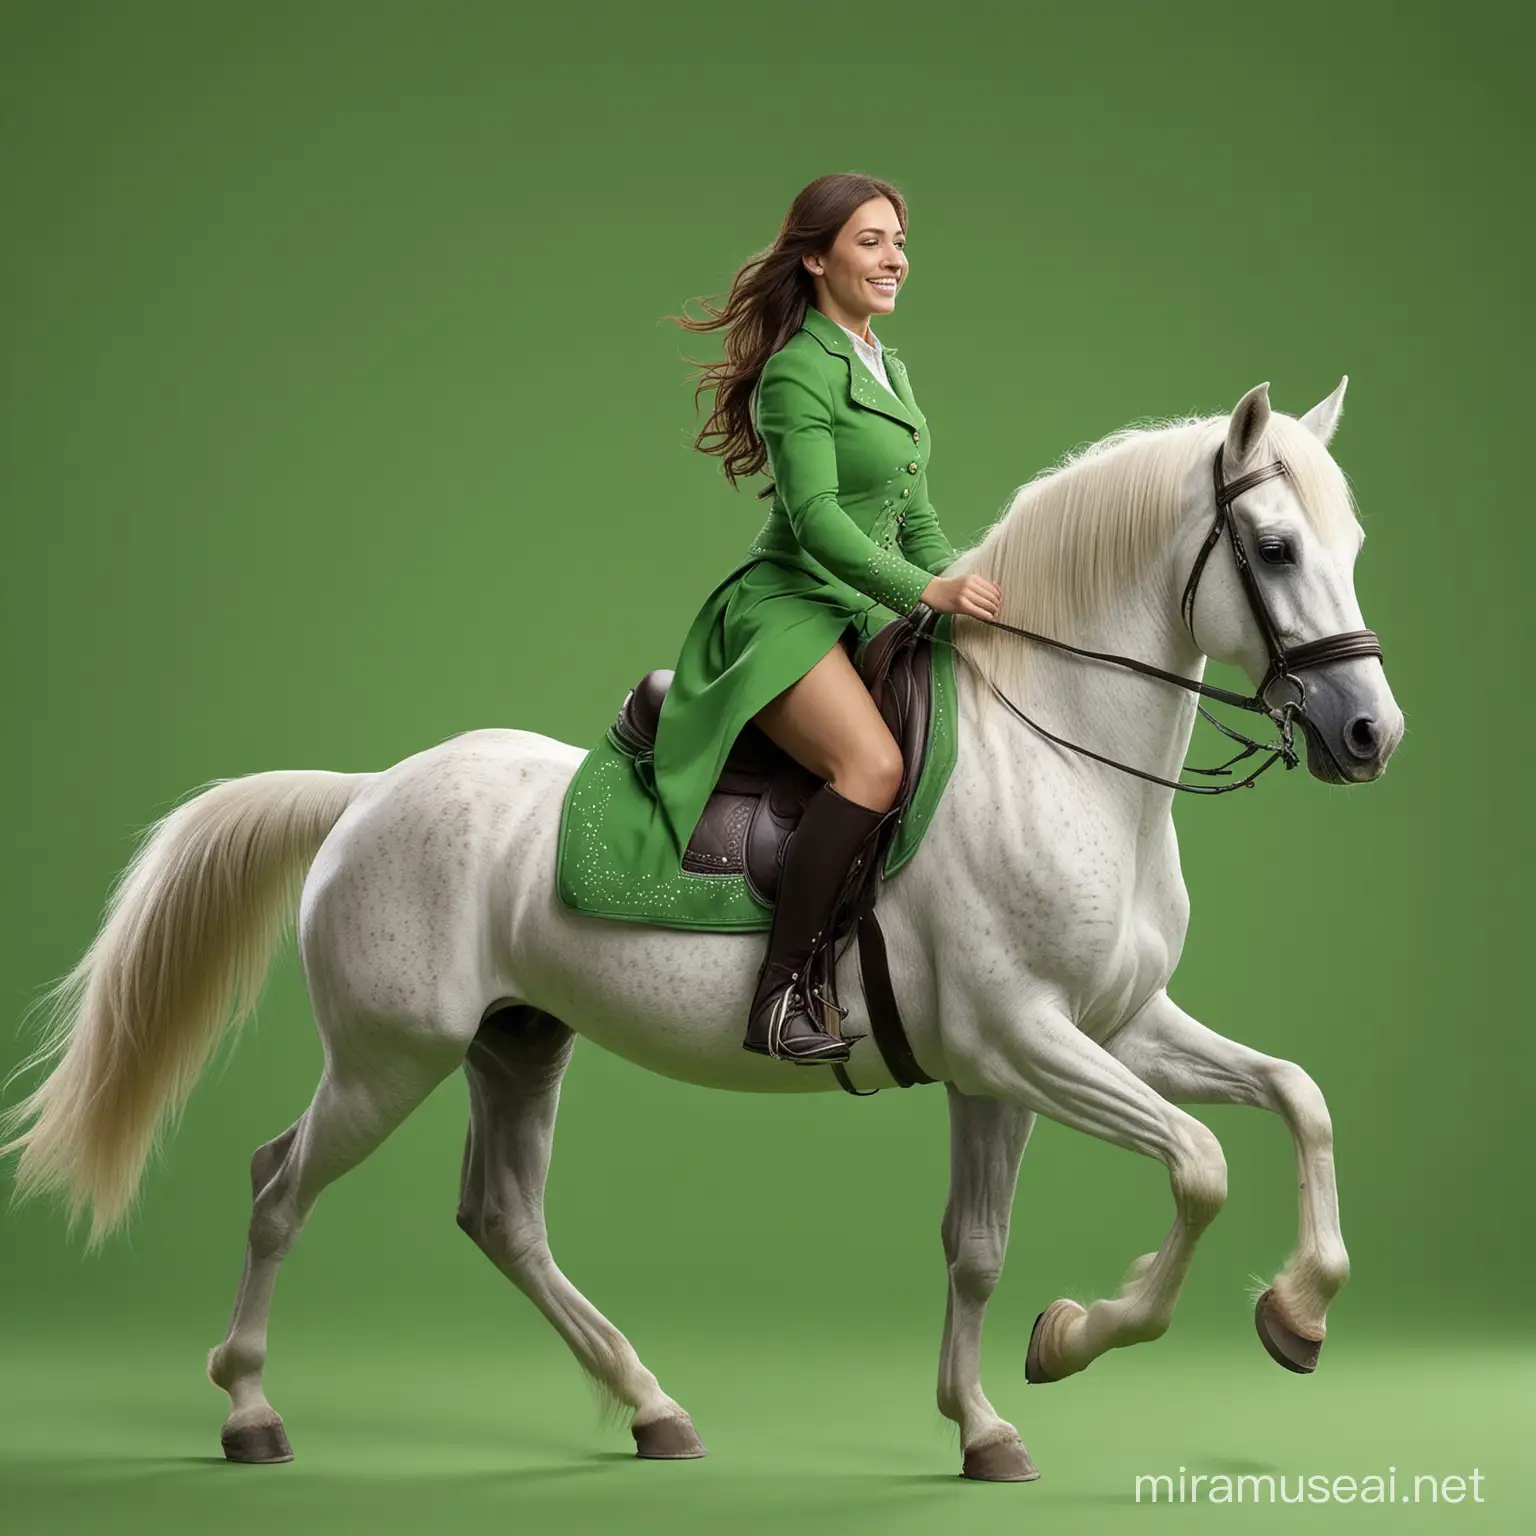 Elegant Woman Riding Majestic Horse with Diamonds and Spiritual Aura